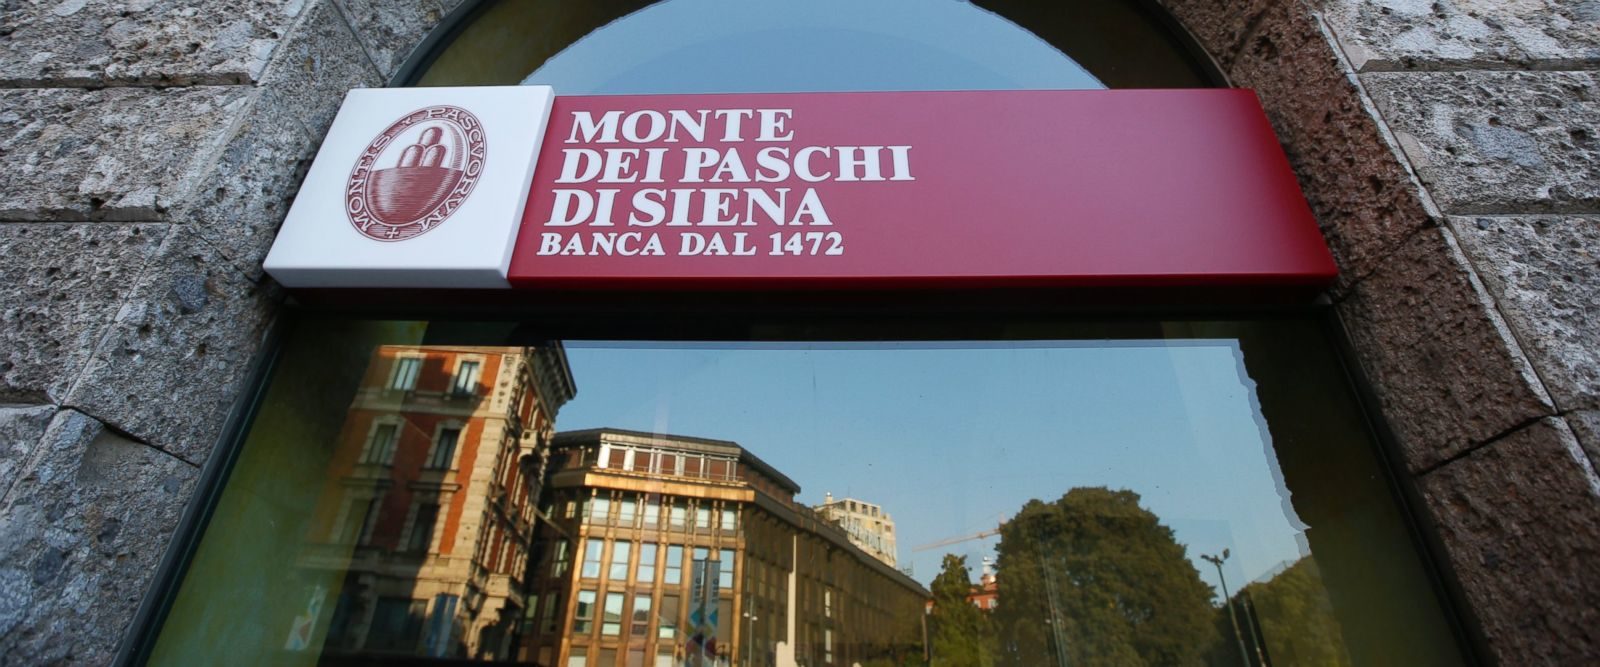 Monte Dei Paschi di Siena bank Milan Italy